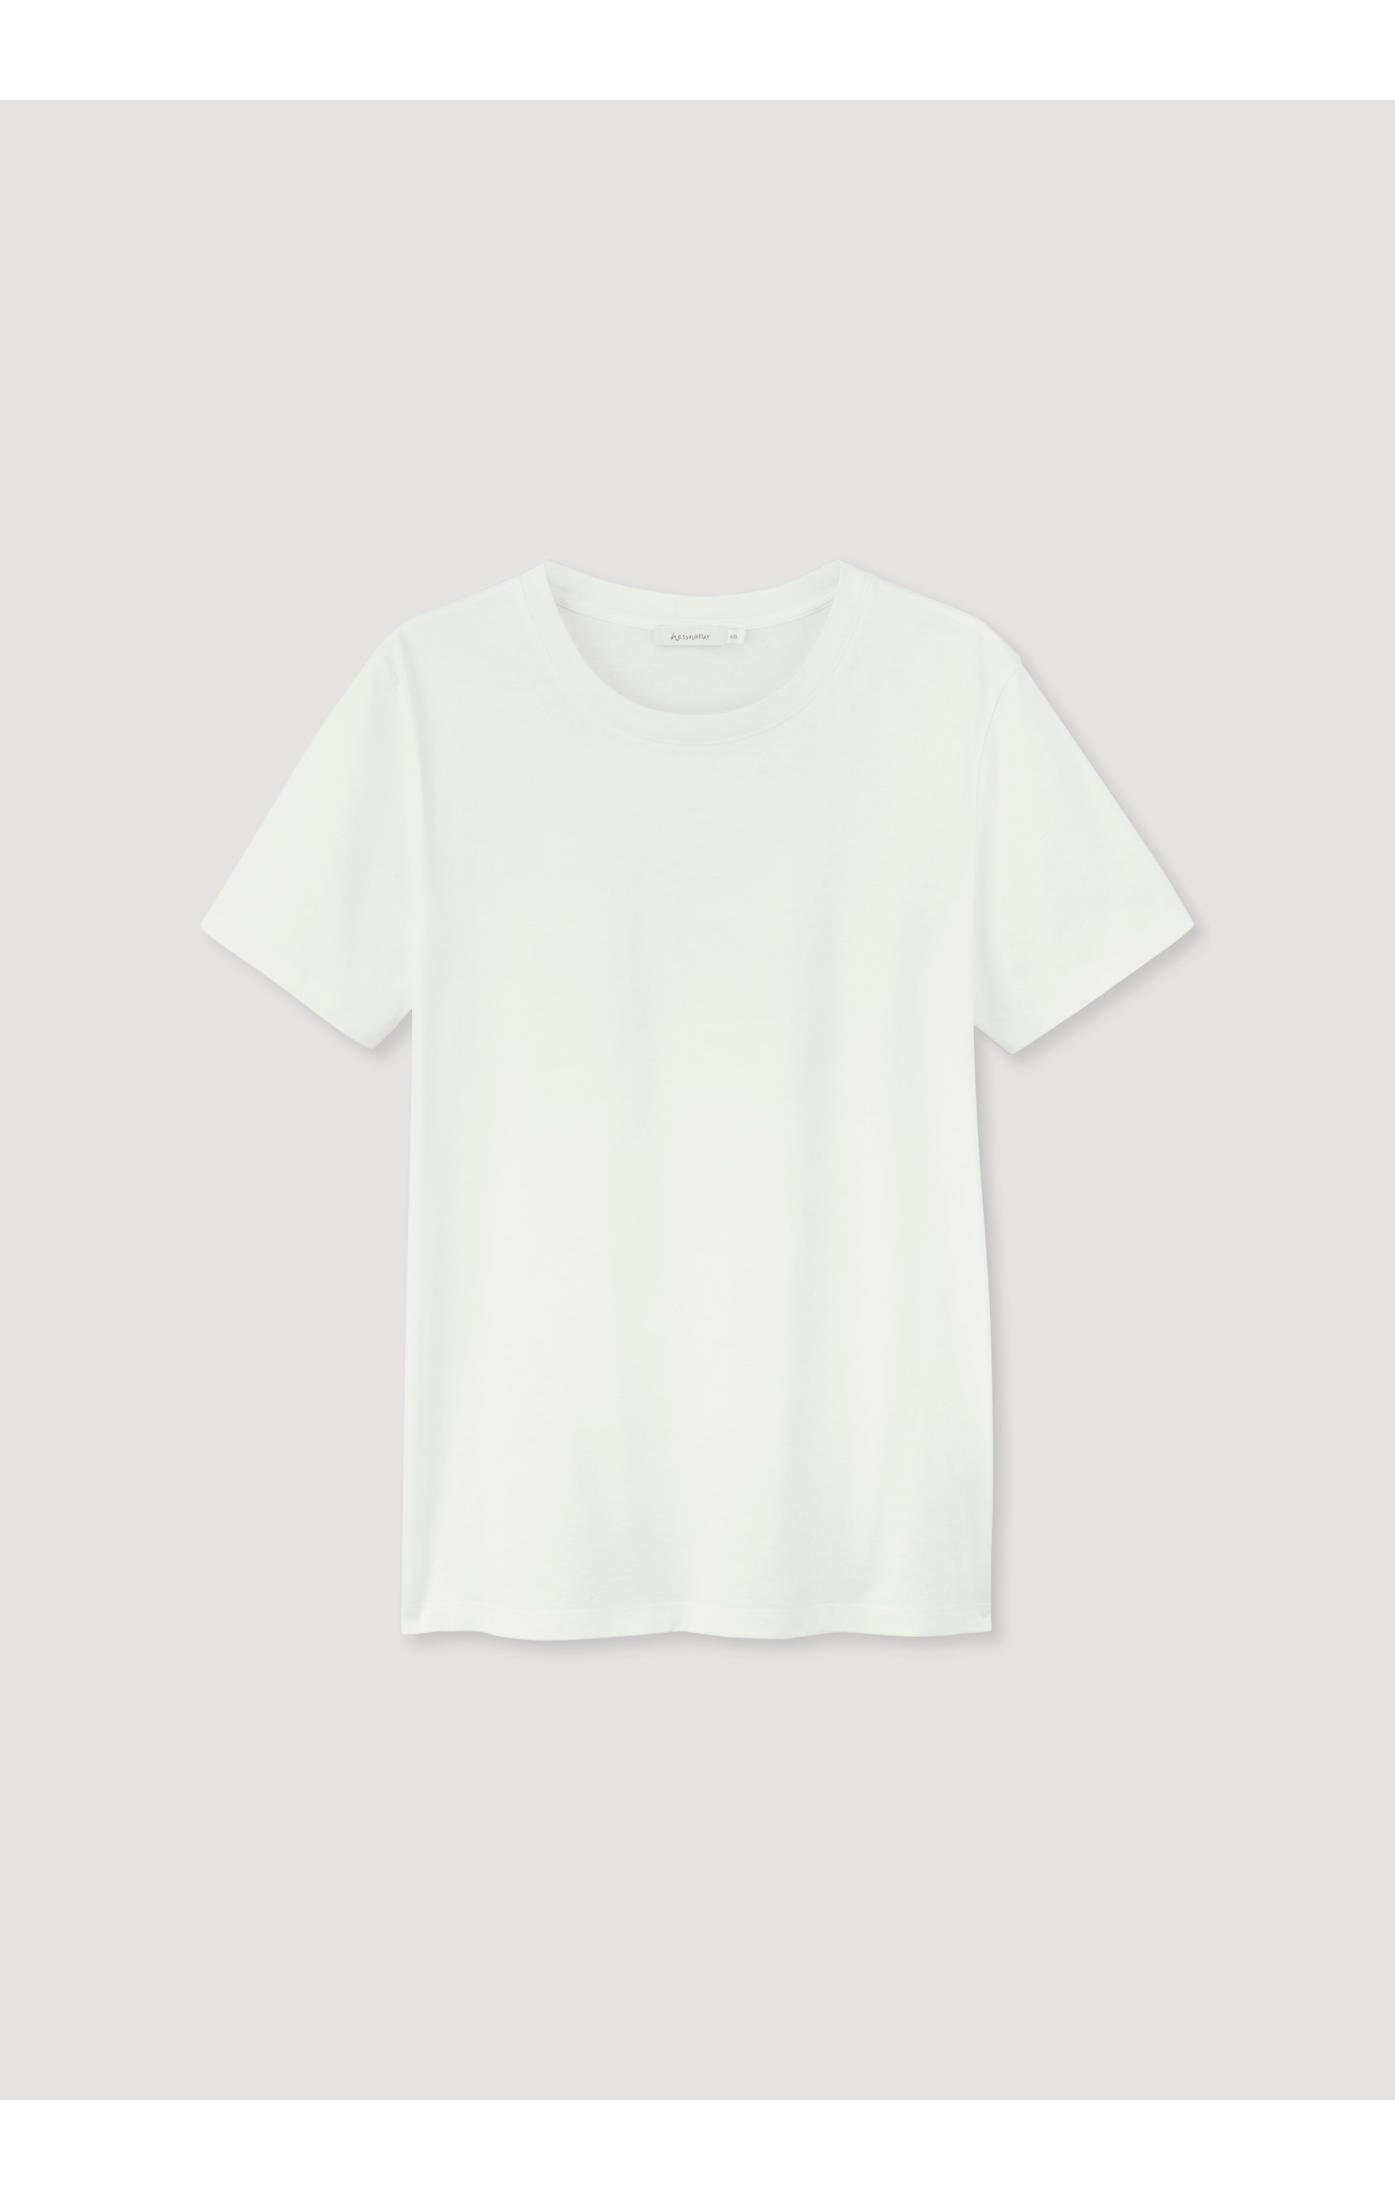 Hessnatur T-Shirt Regular Bio-Baumwolle aus naturweiss reiner